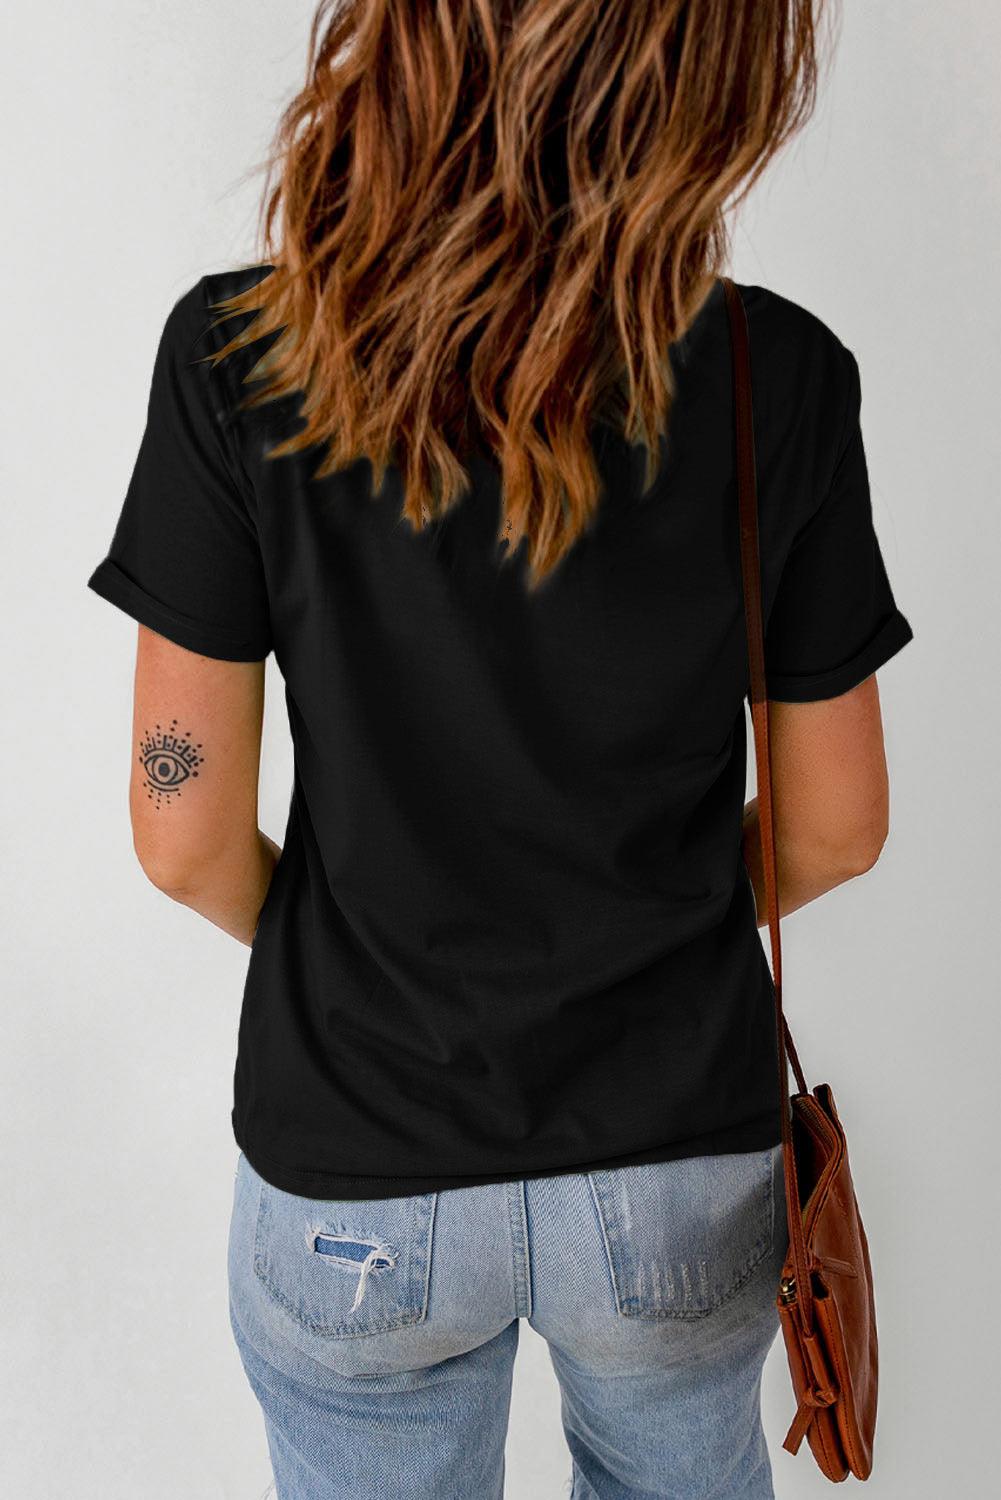 Khaki AMEN Leopard Print Short Sleeve Graphic T Shirt - L & M Kee, LLC